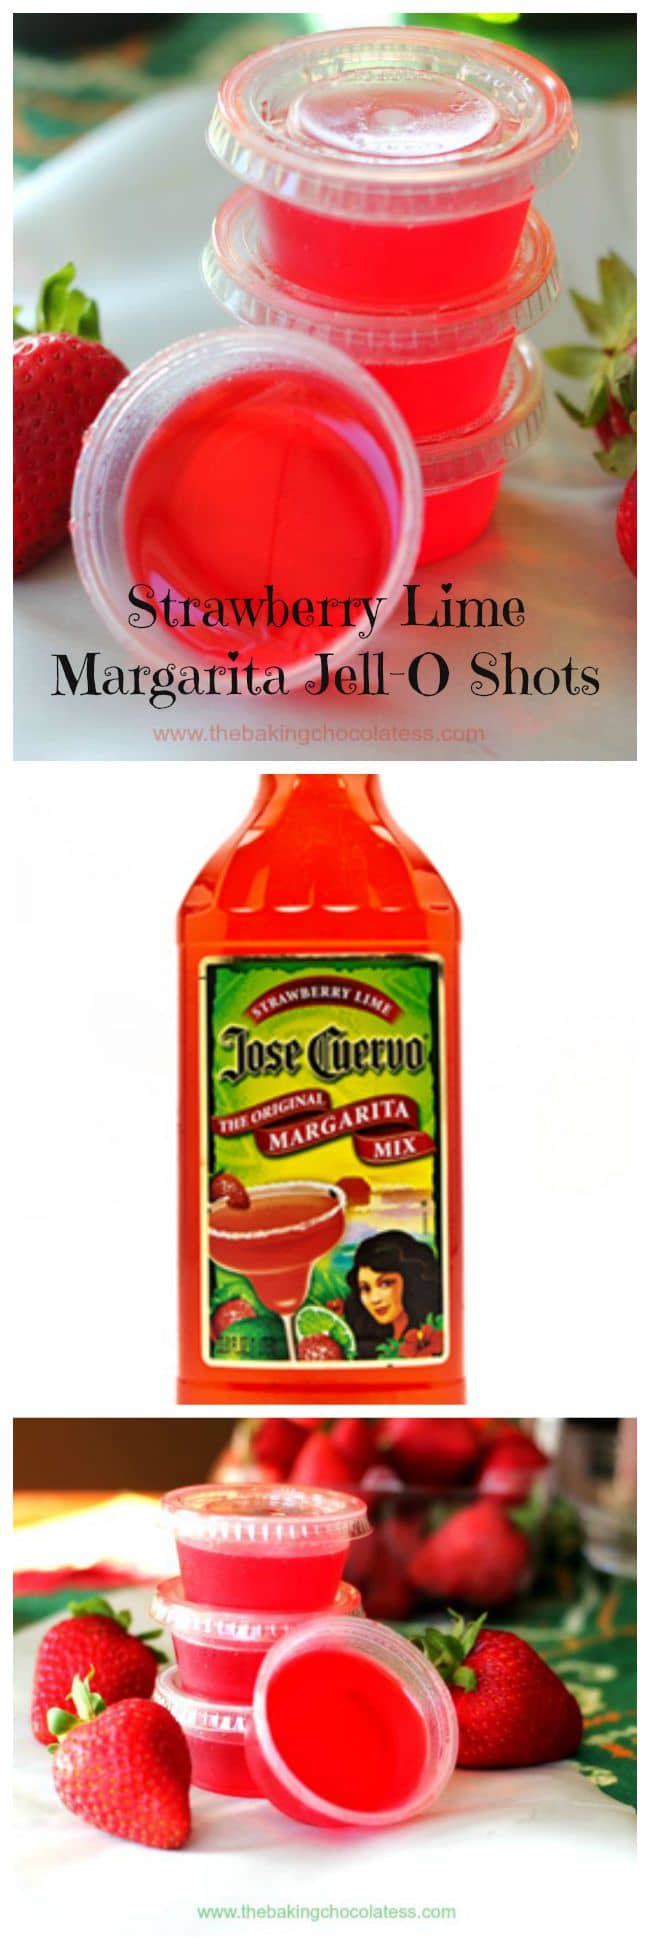 Strawberry Lime Margarita Jell-O Shots